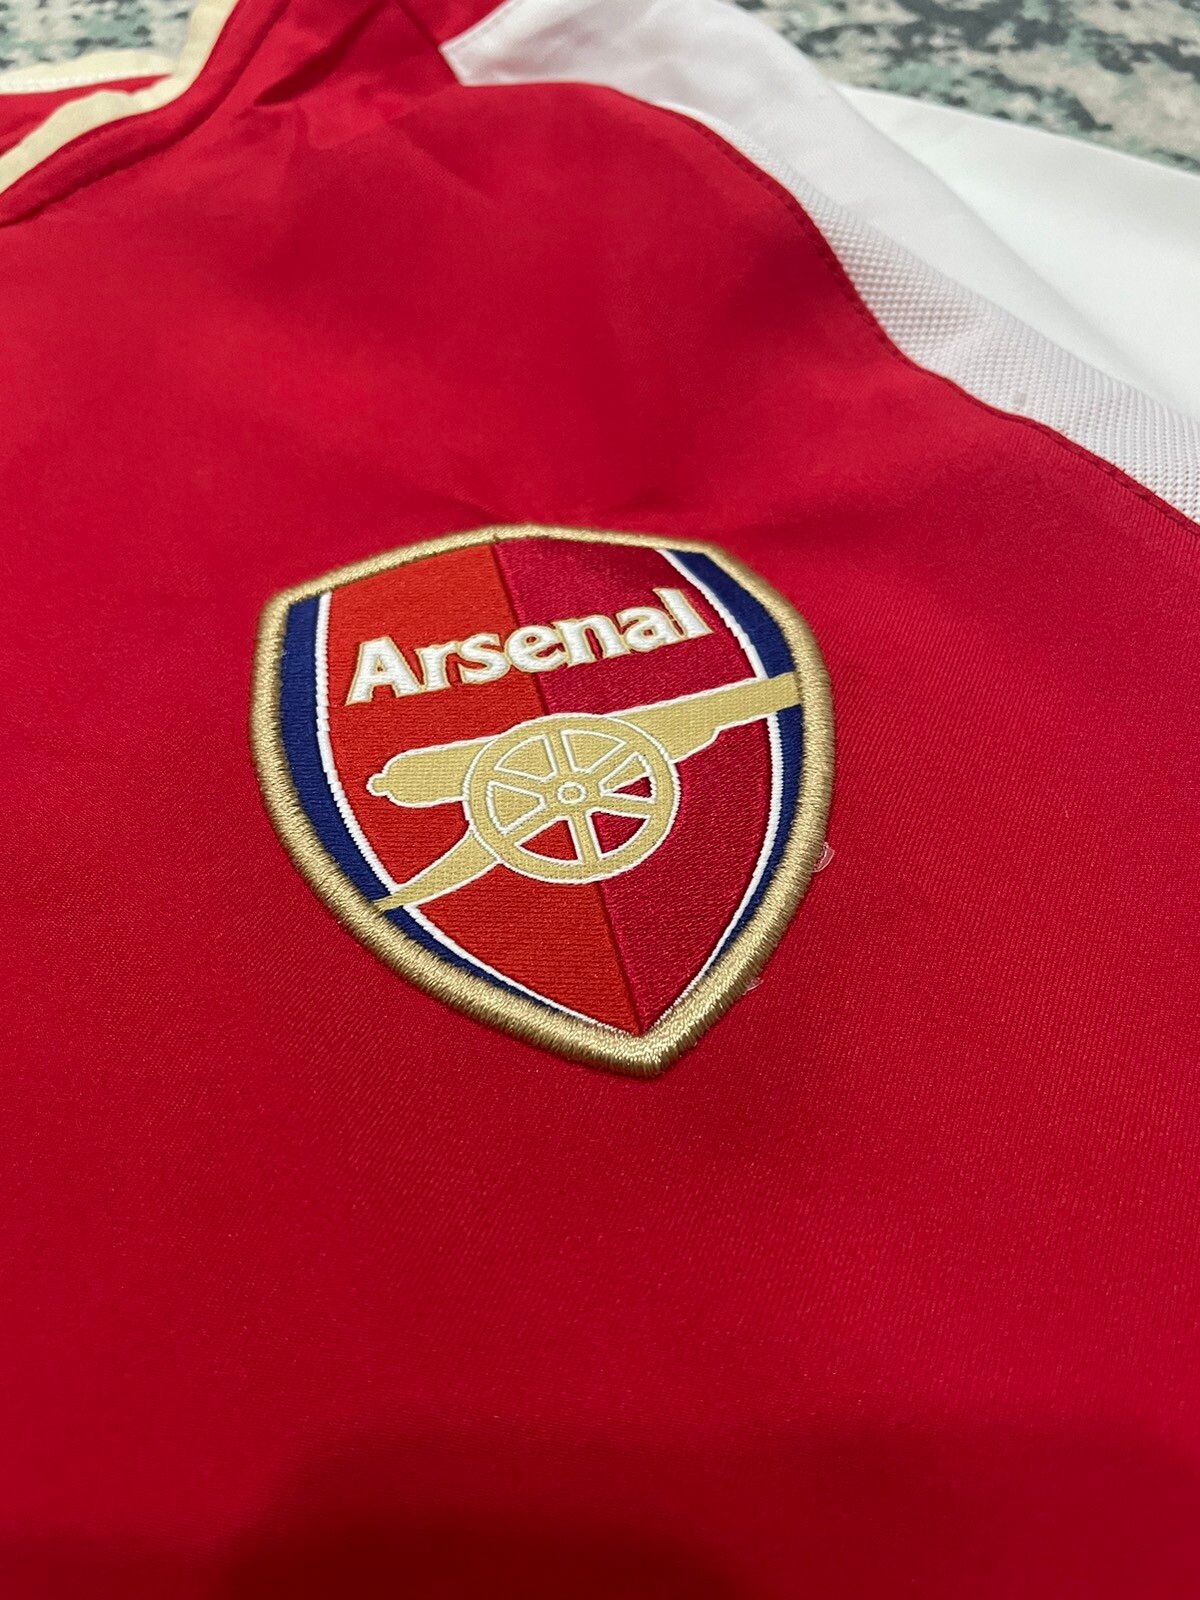 Arsenal 02/03 Vintage Jersey - 5